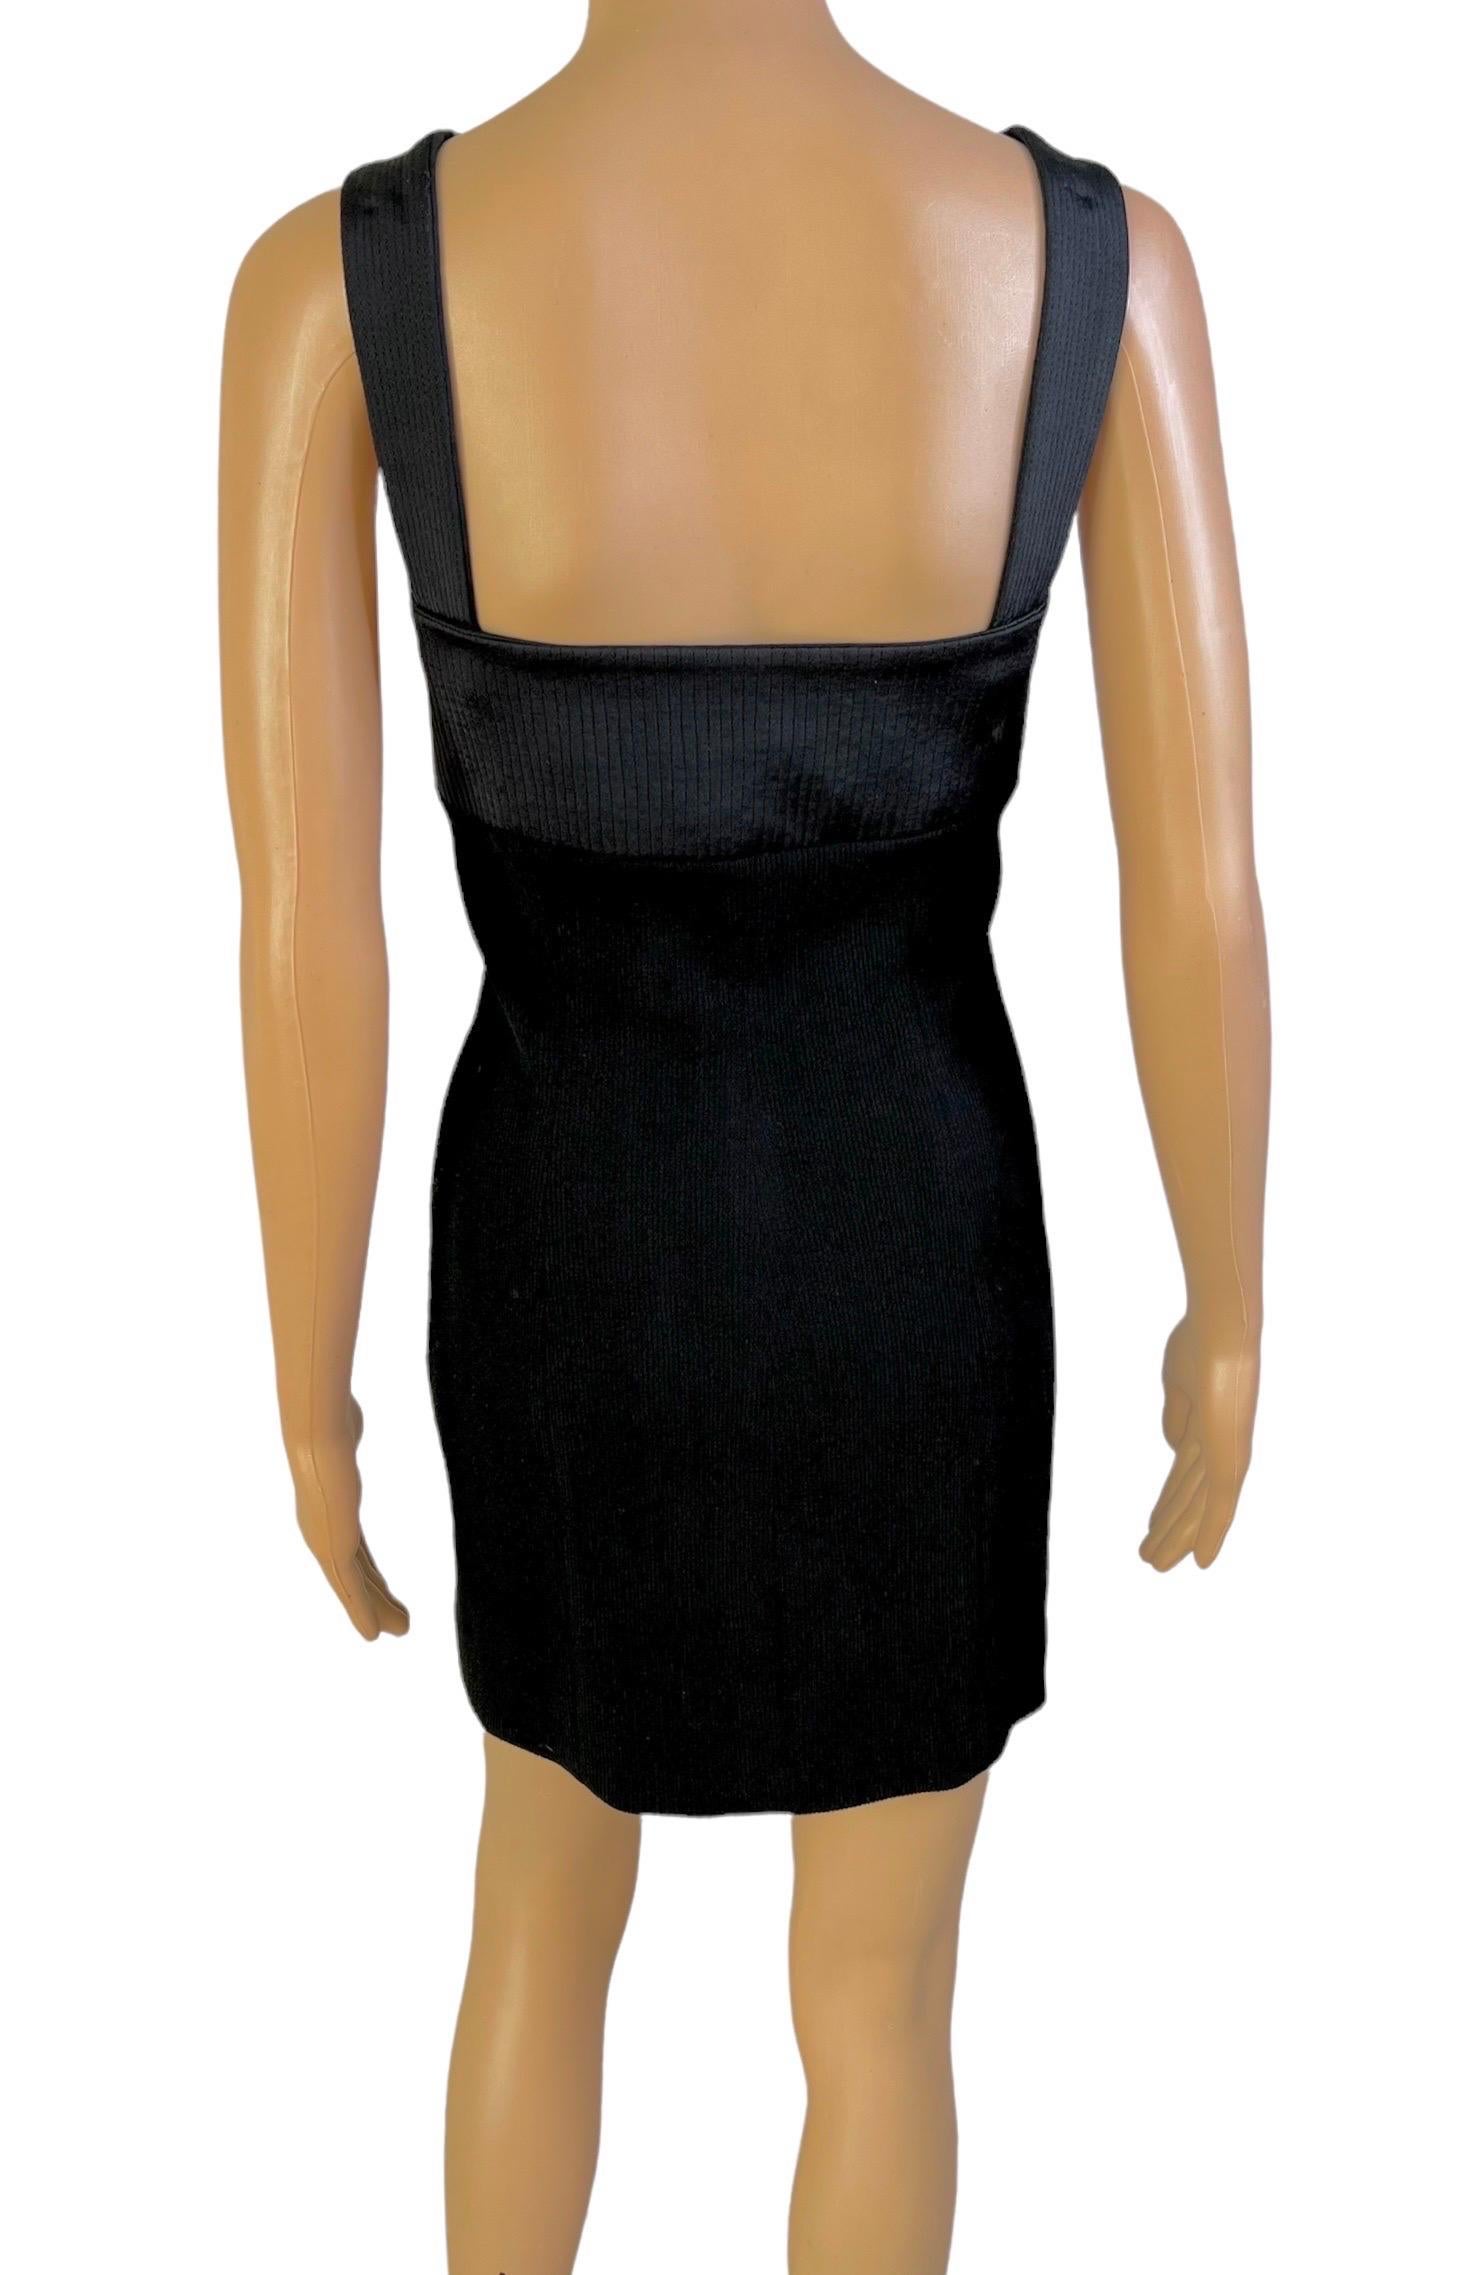 Gianni Versace S/S 1992 Couture Bustier Corset Lace Up Black Mini Dress For Sale 3